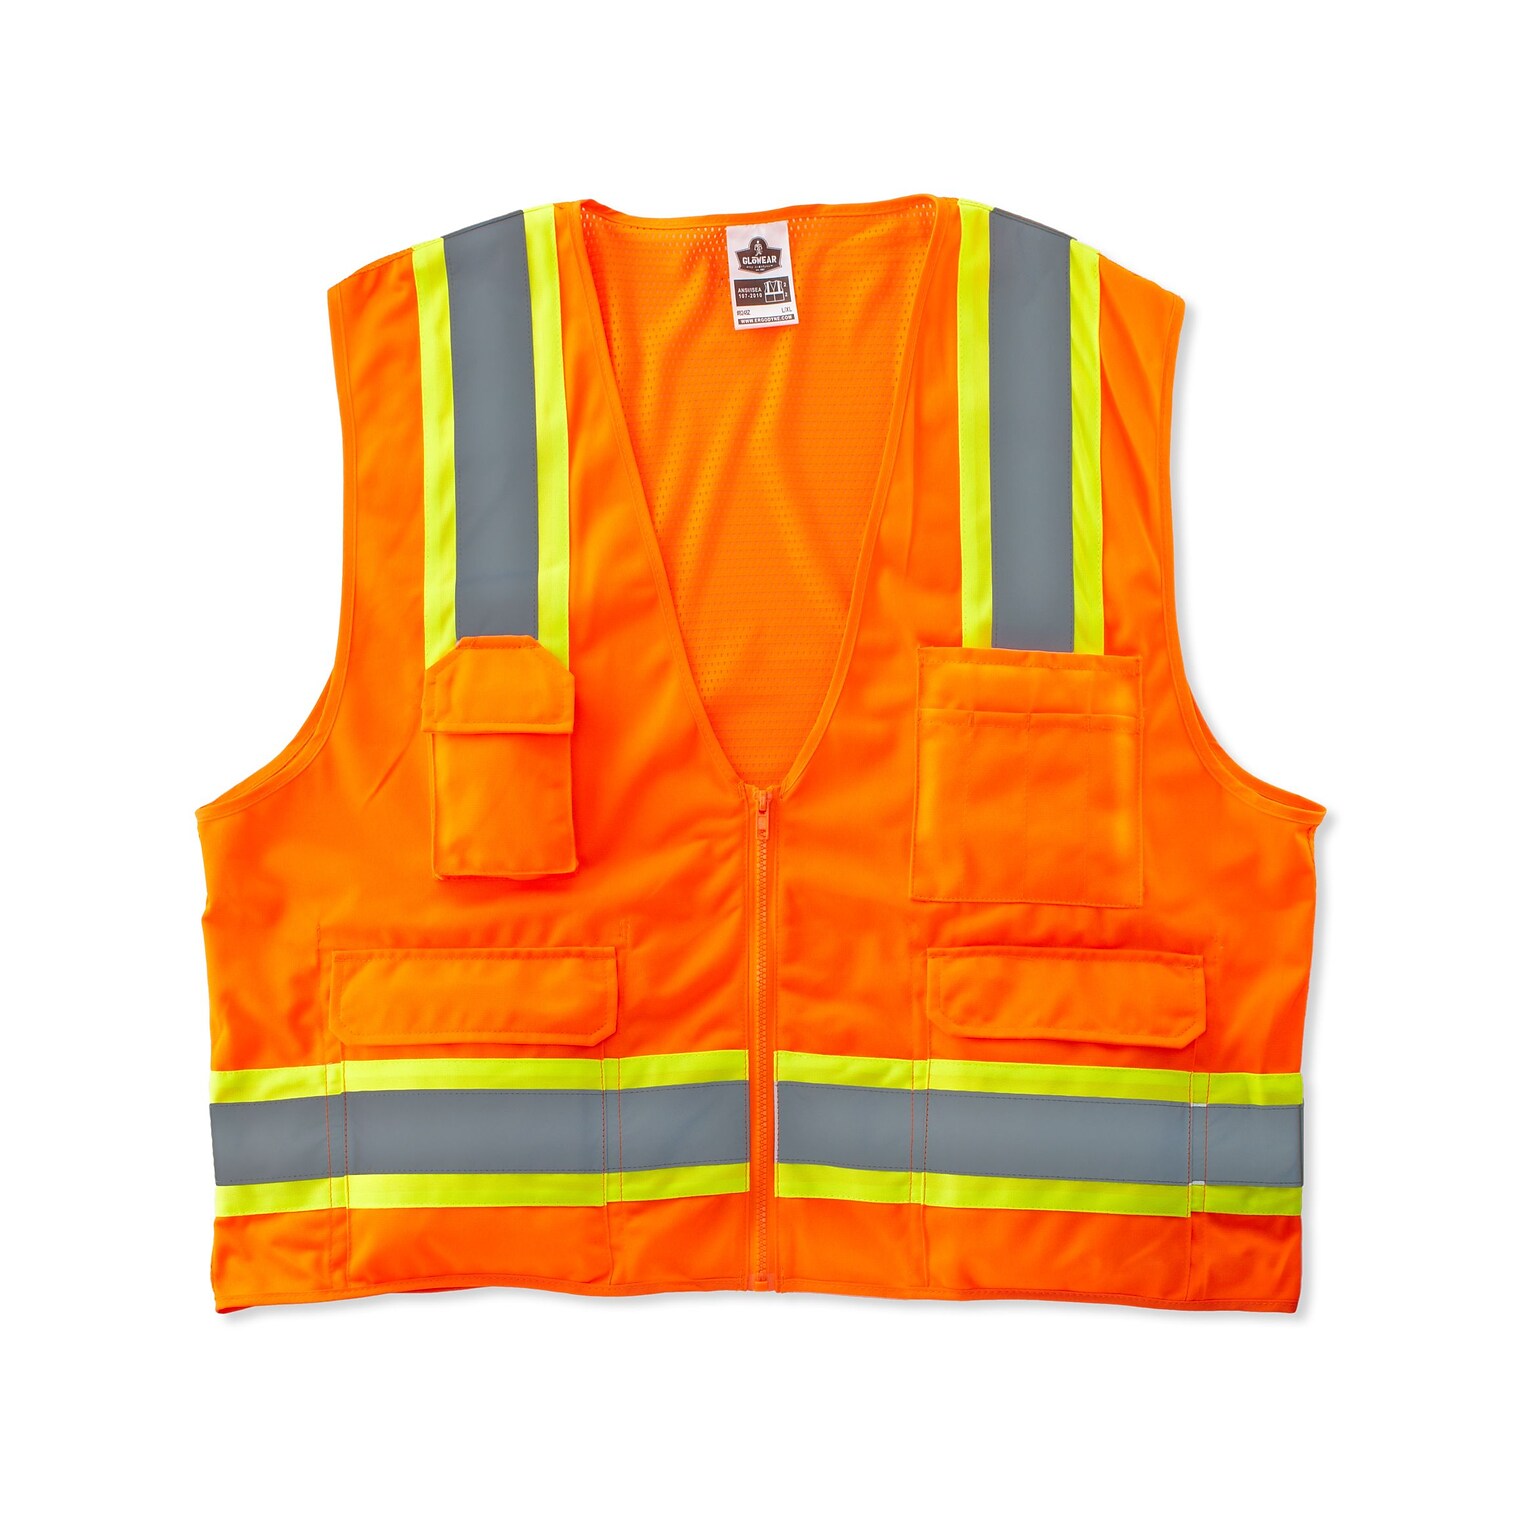 Ergodyne GloWear 8248Z High Visibility Sleeveless Safety Vest, ANSI Class R2, Orange, Large (24065)